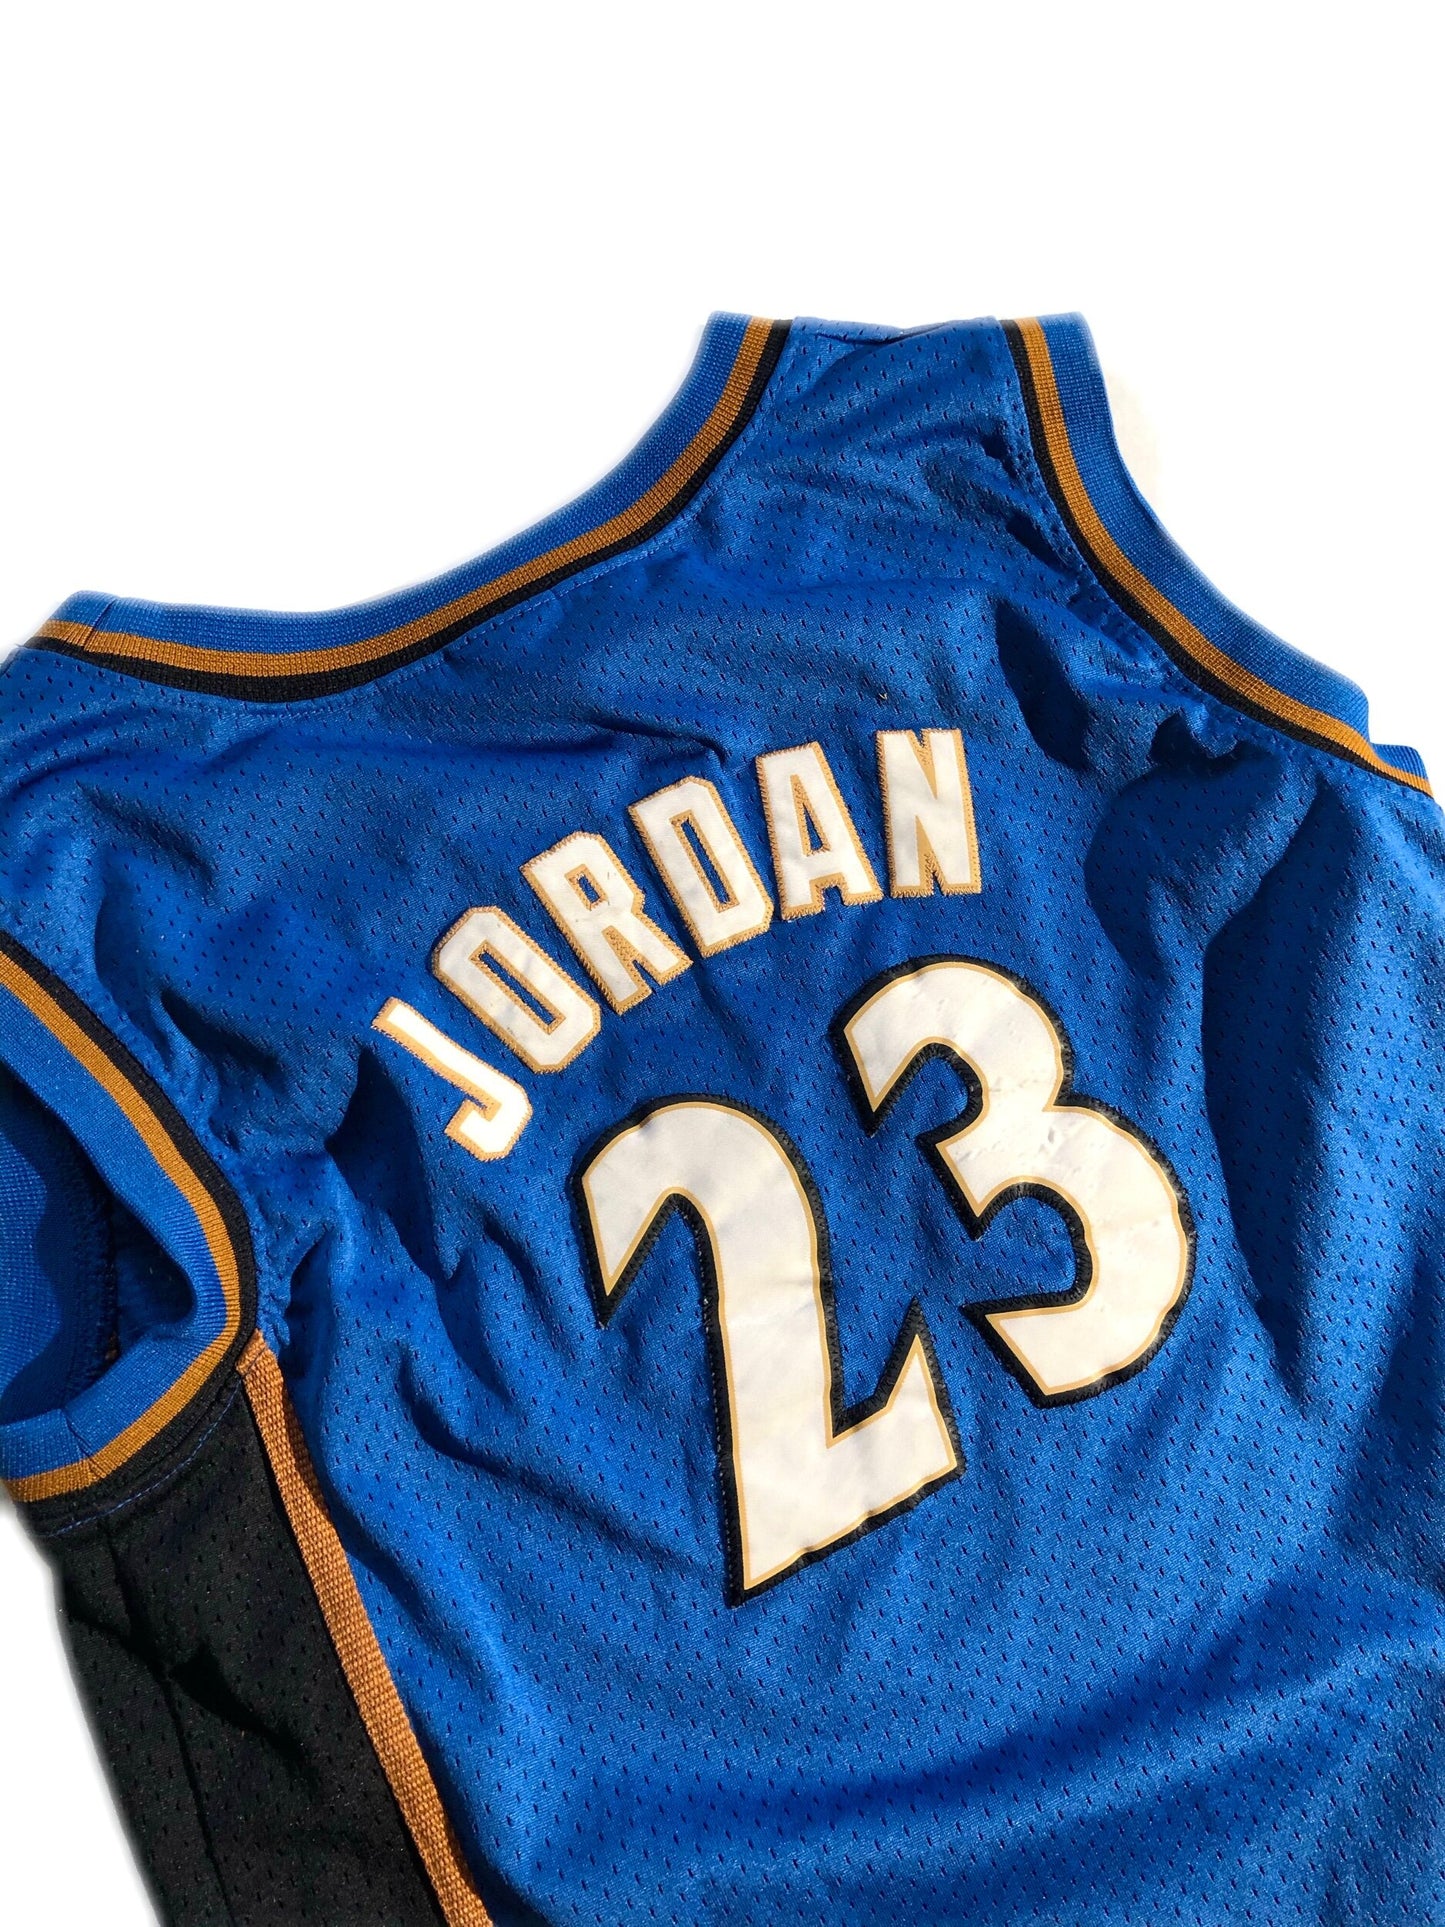 Vintage Jordan Jersey (Wizards)